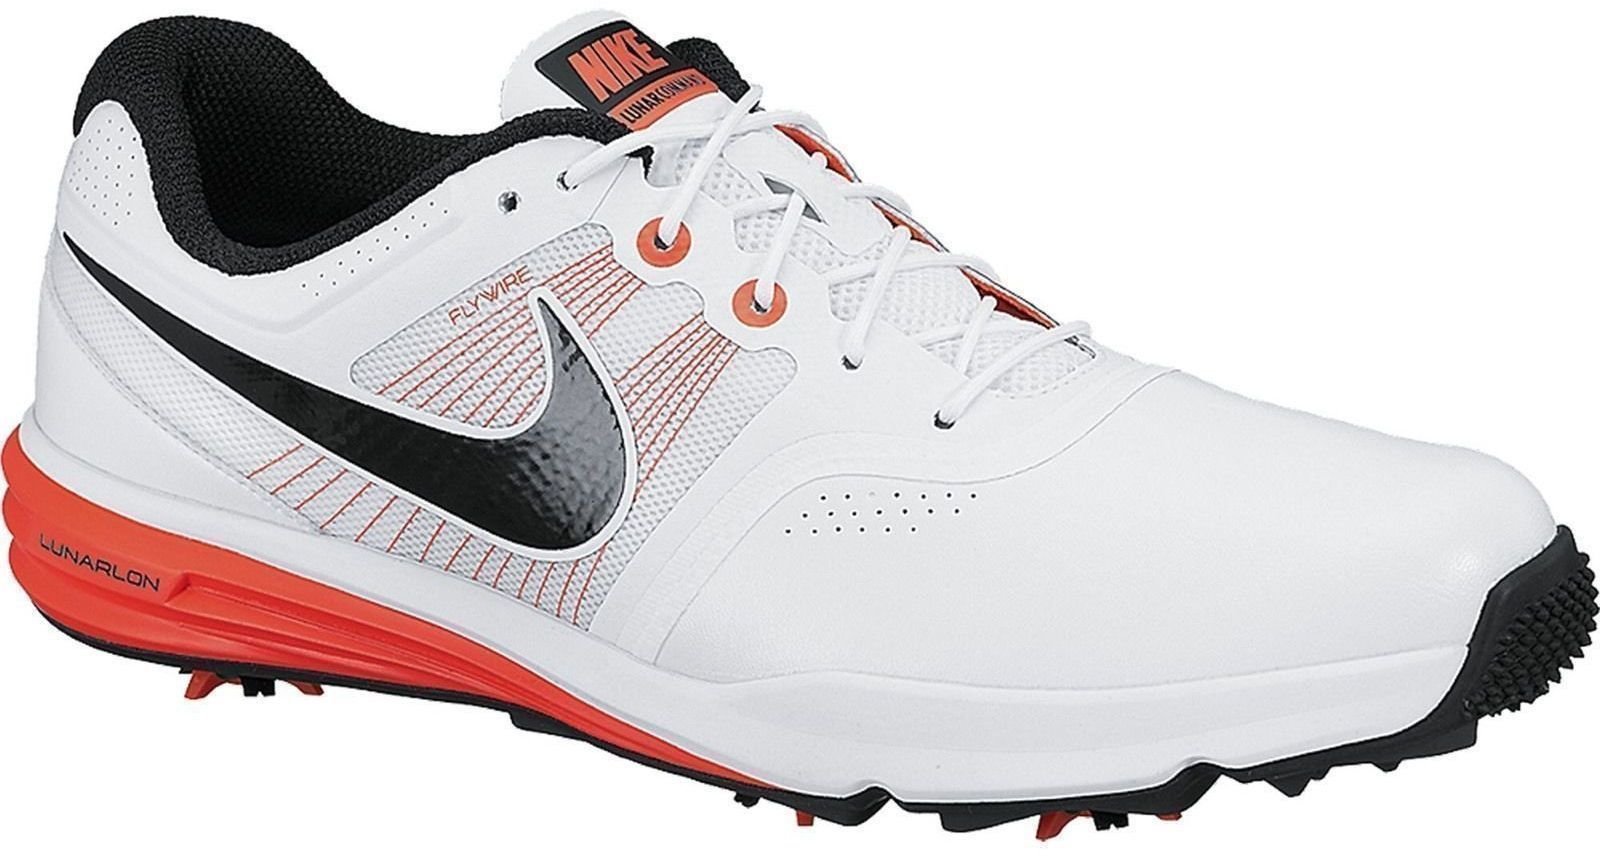 Men's golf shoes Nike Lunar Command Mens Golf Shoes White/Black/Crimson US 10